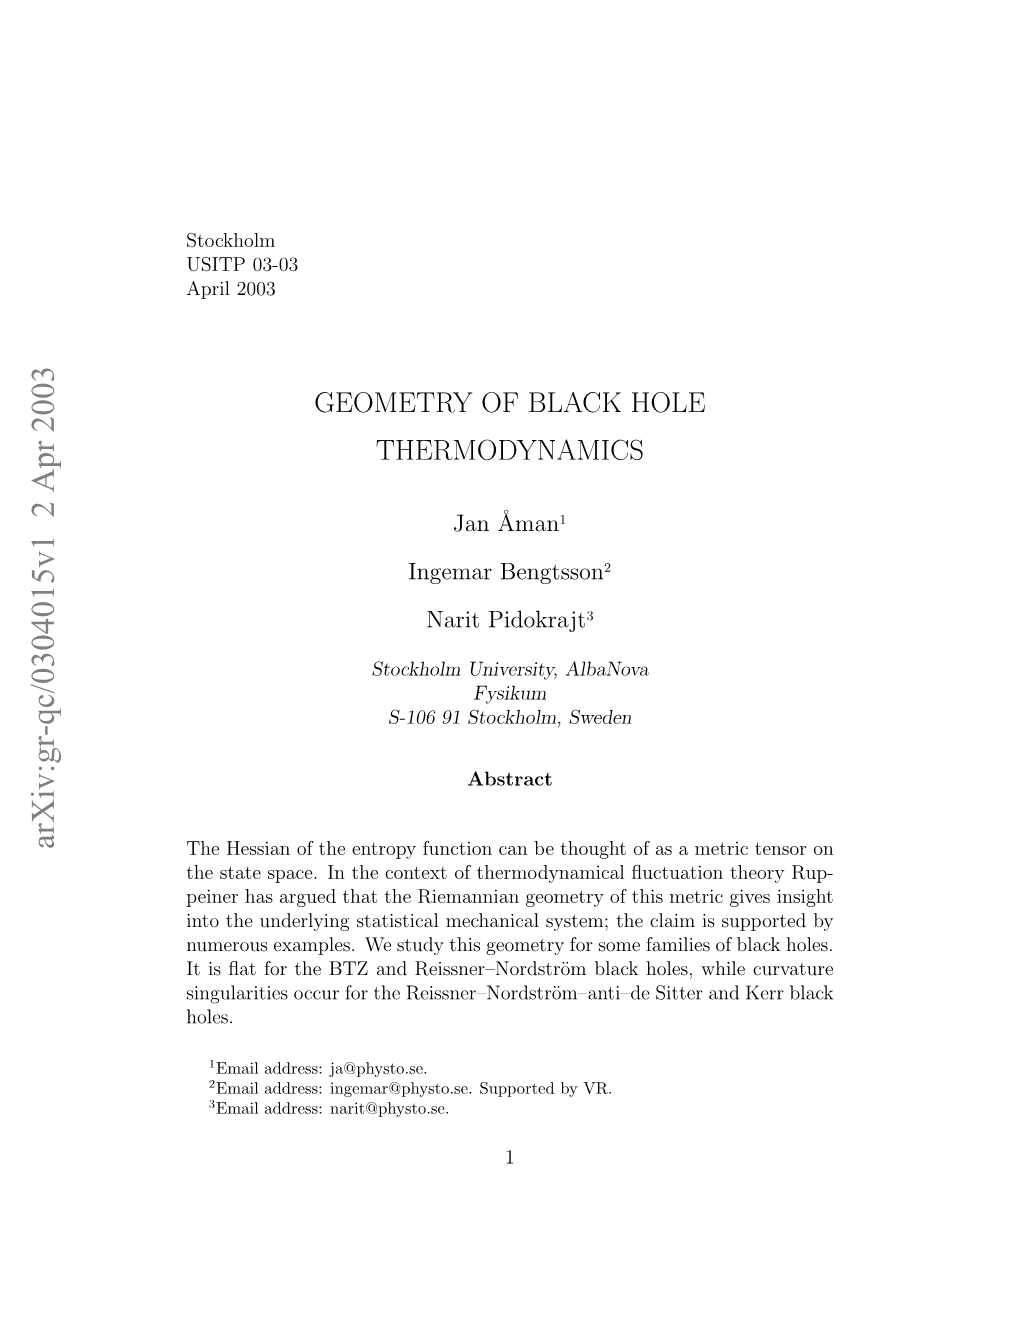 Geometry of Black Hole Thermodynamics